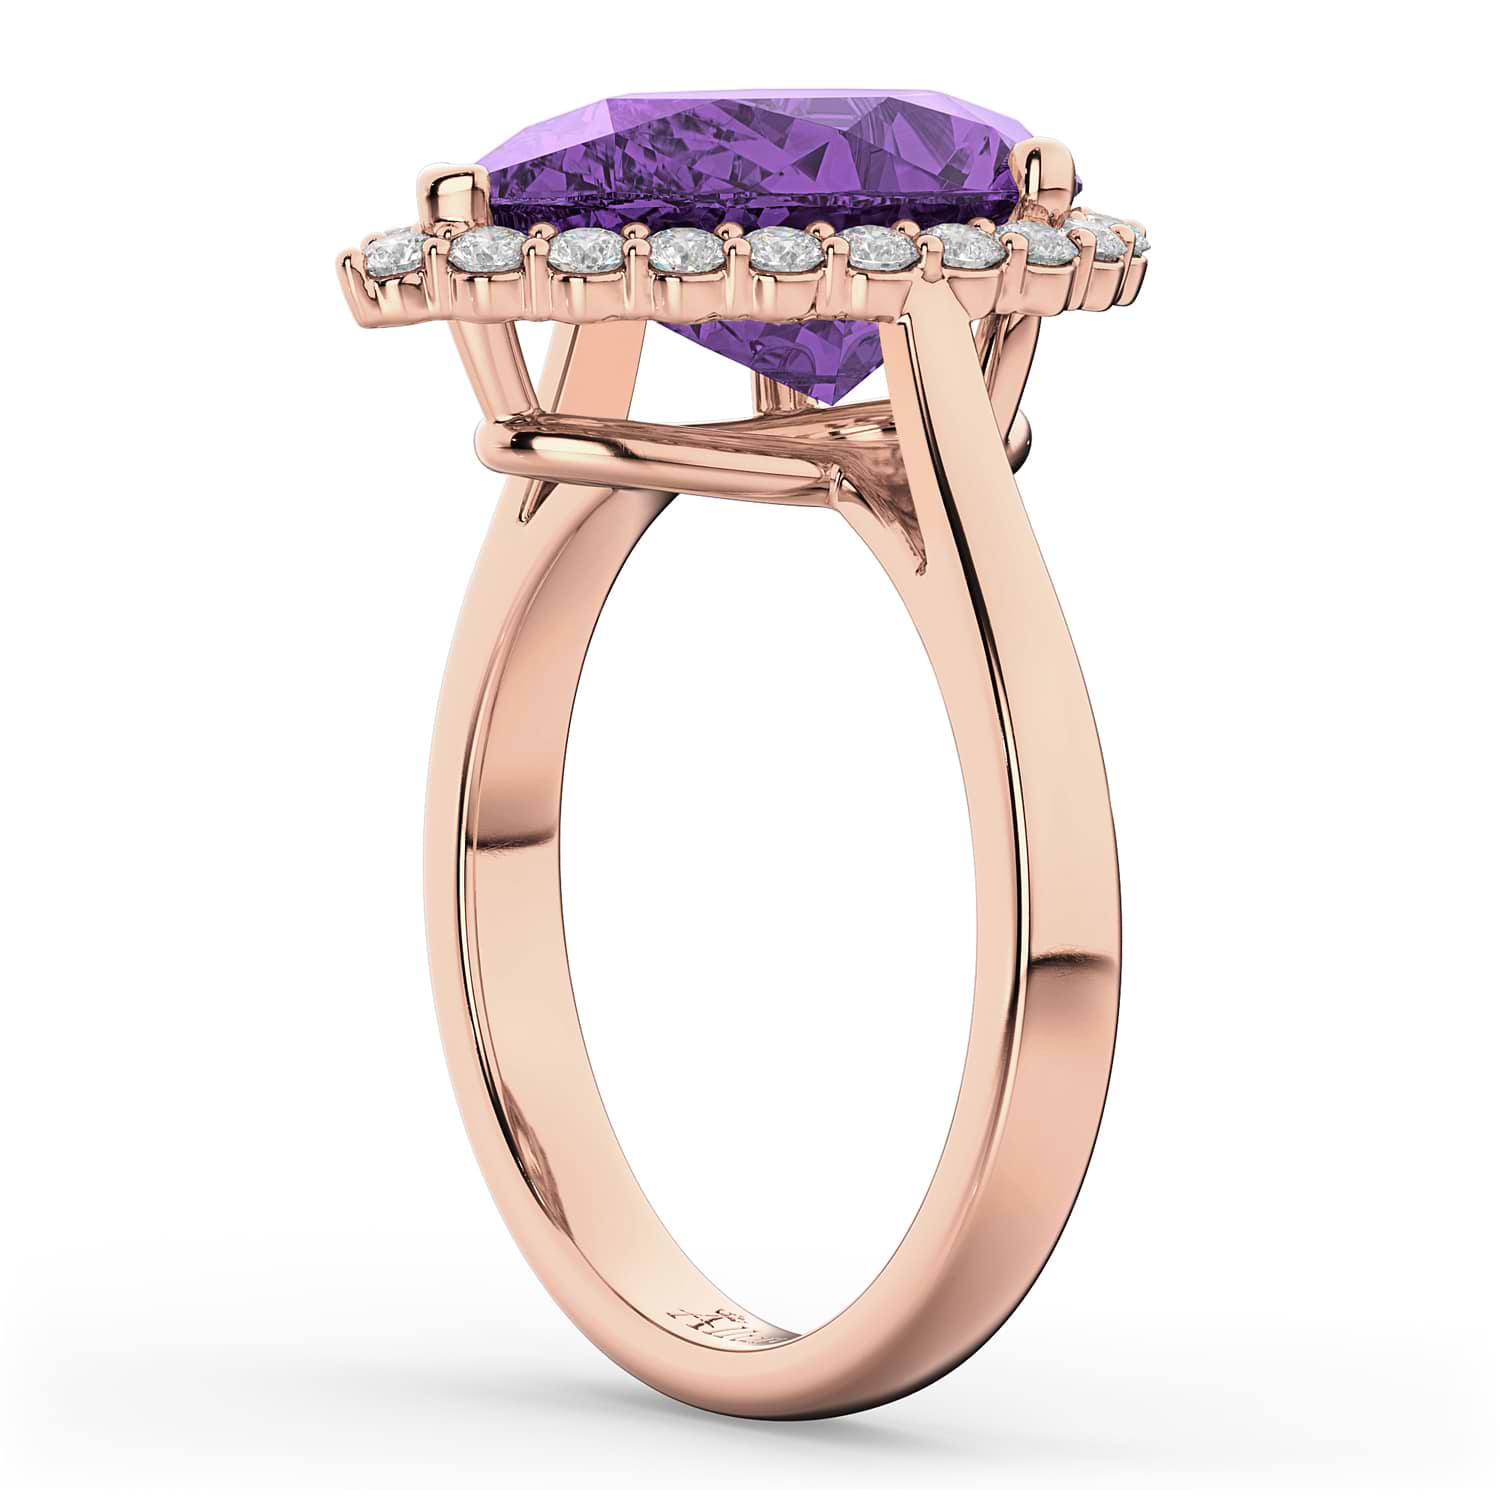 Pear Cut Halo Amethyst & Diamond Engagement Ring 14K Rose Gold 5.44ct